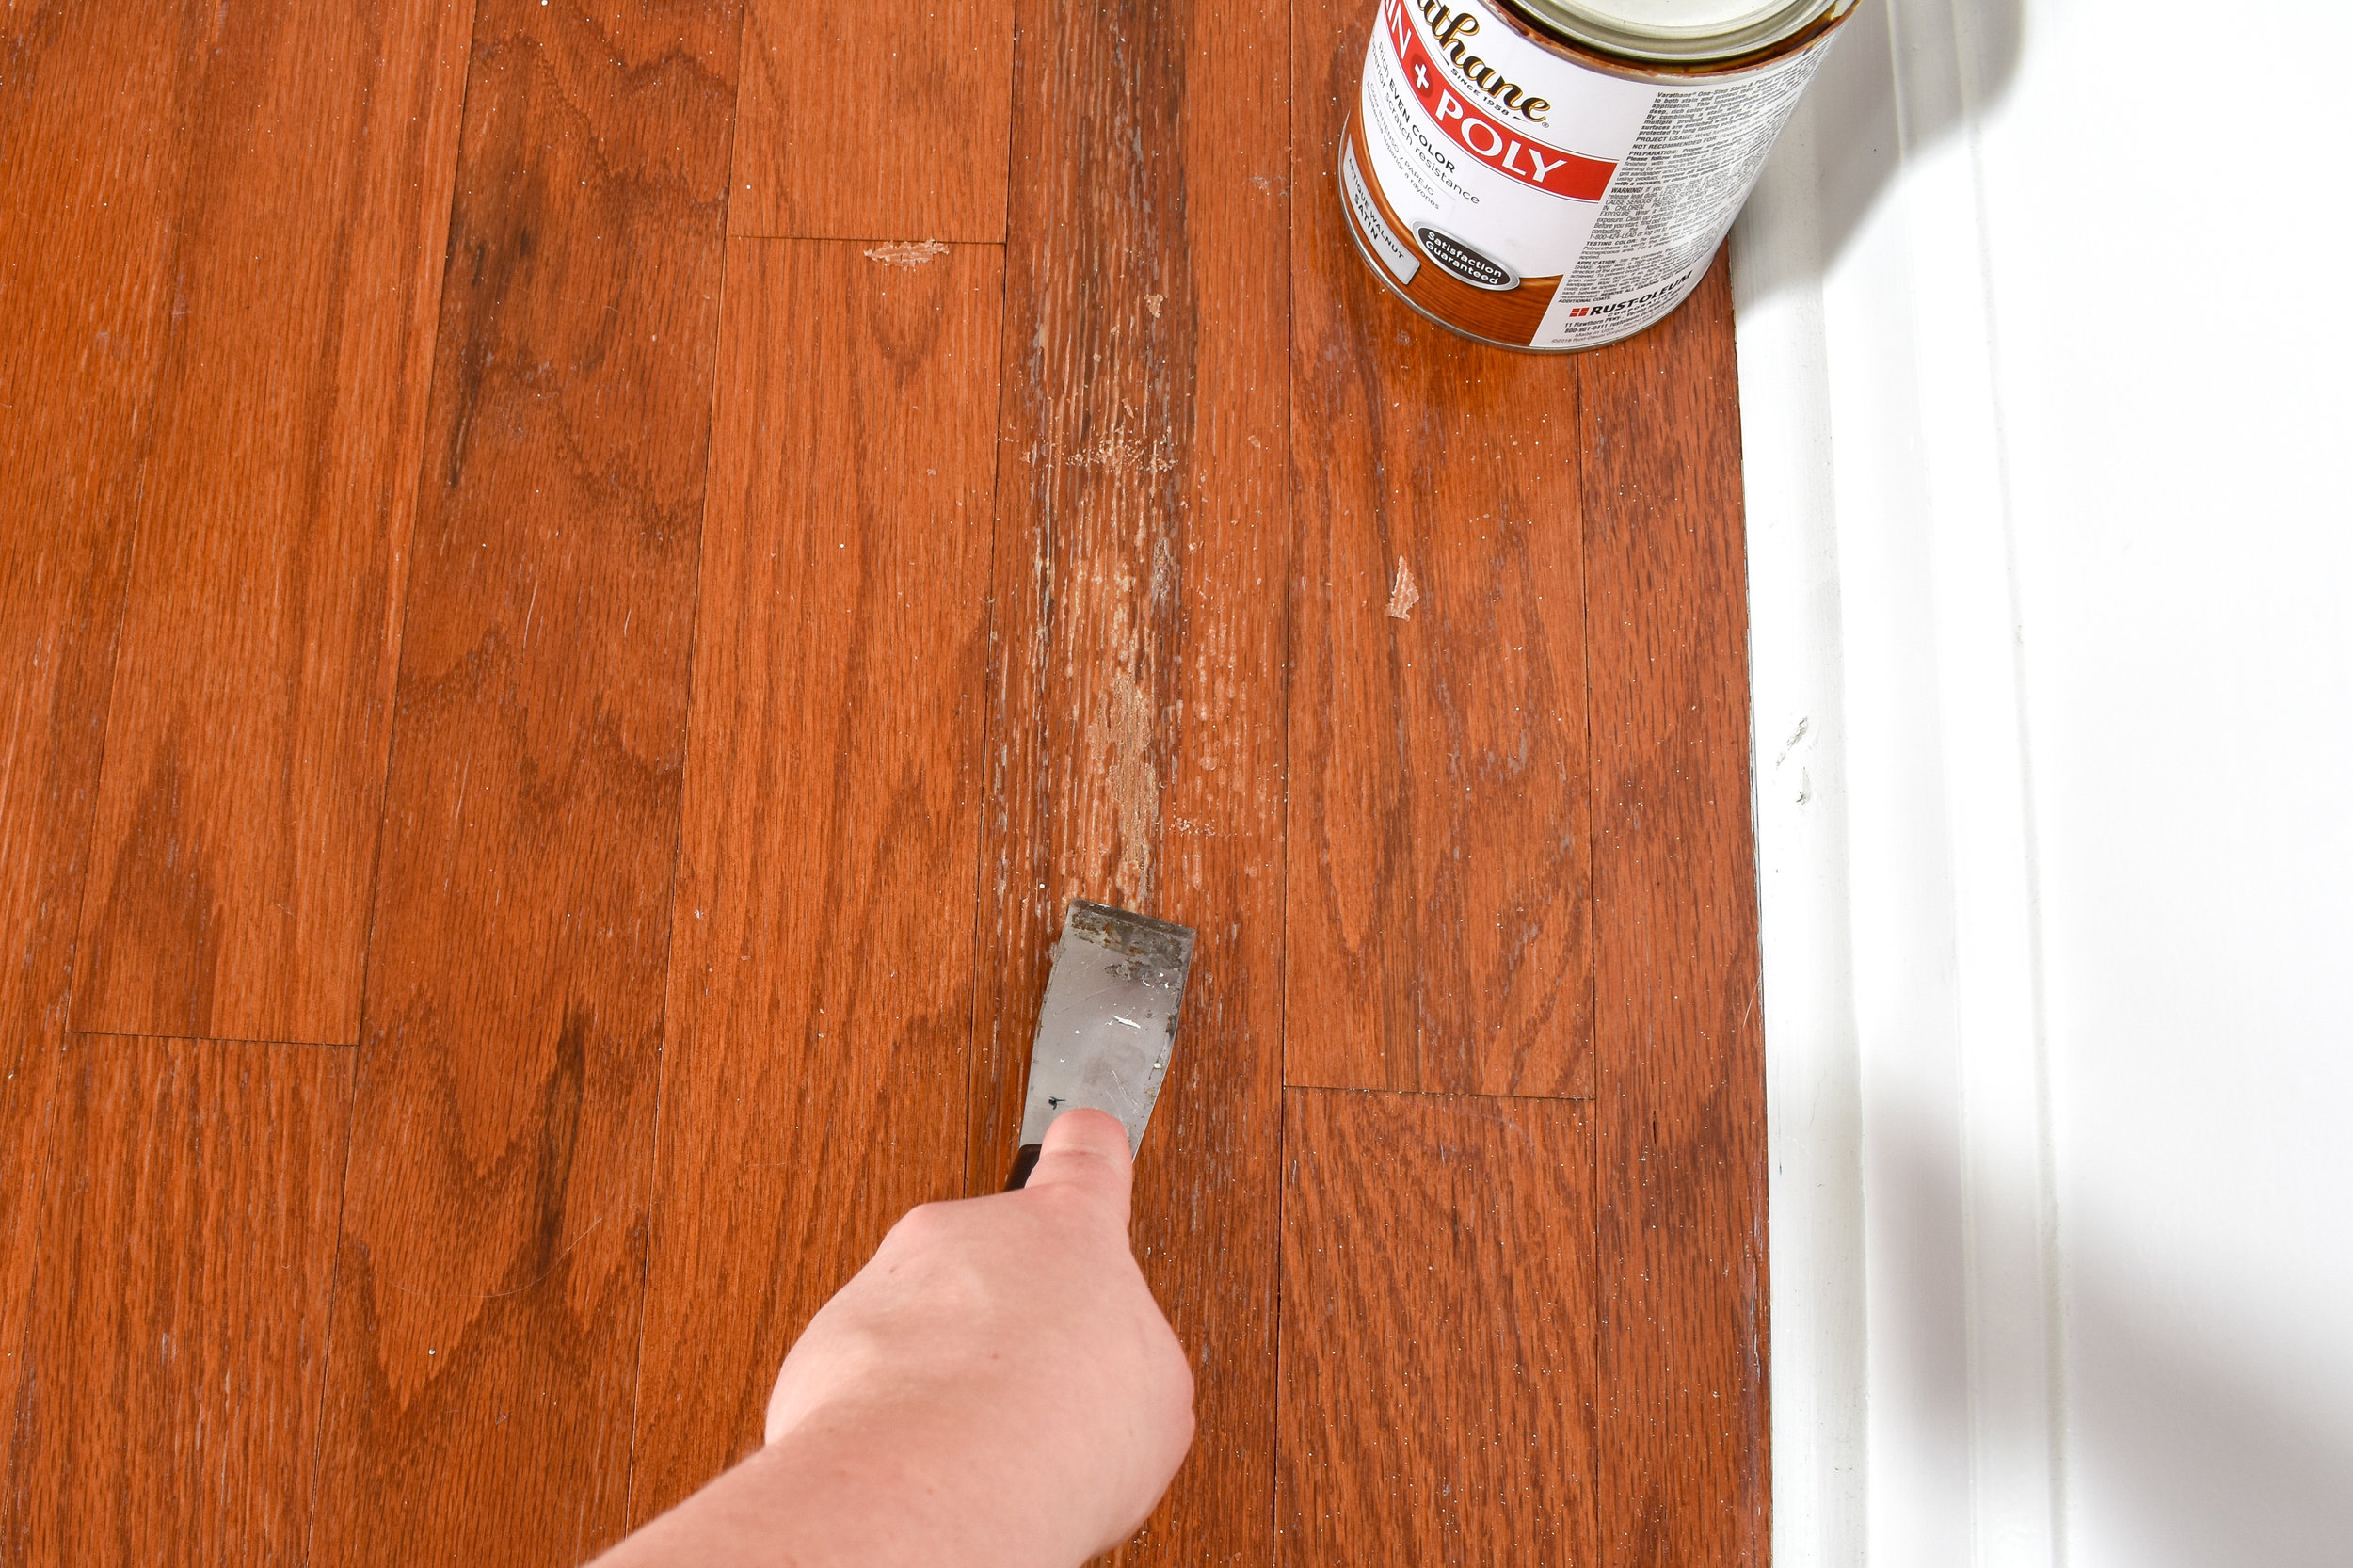 How To Make Old Hardwood Floors Shine, How Do I Keep My Hardwood Floors Shiny